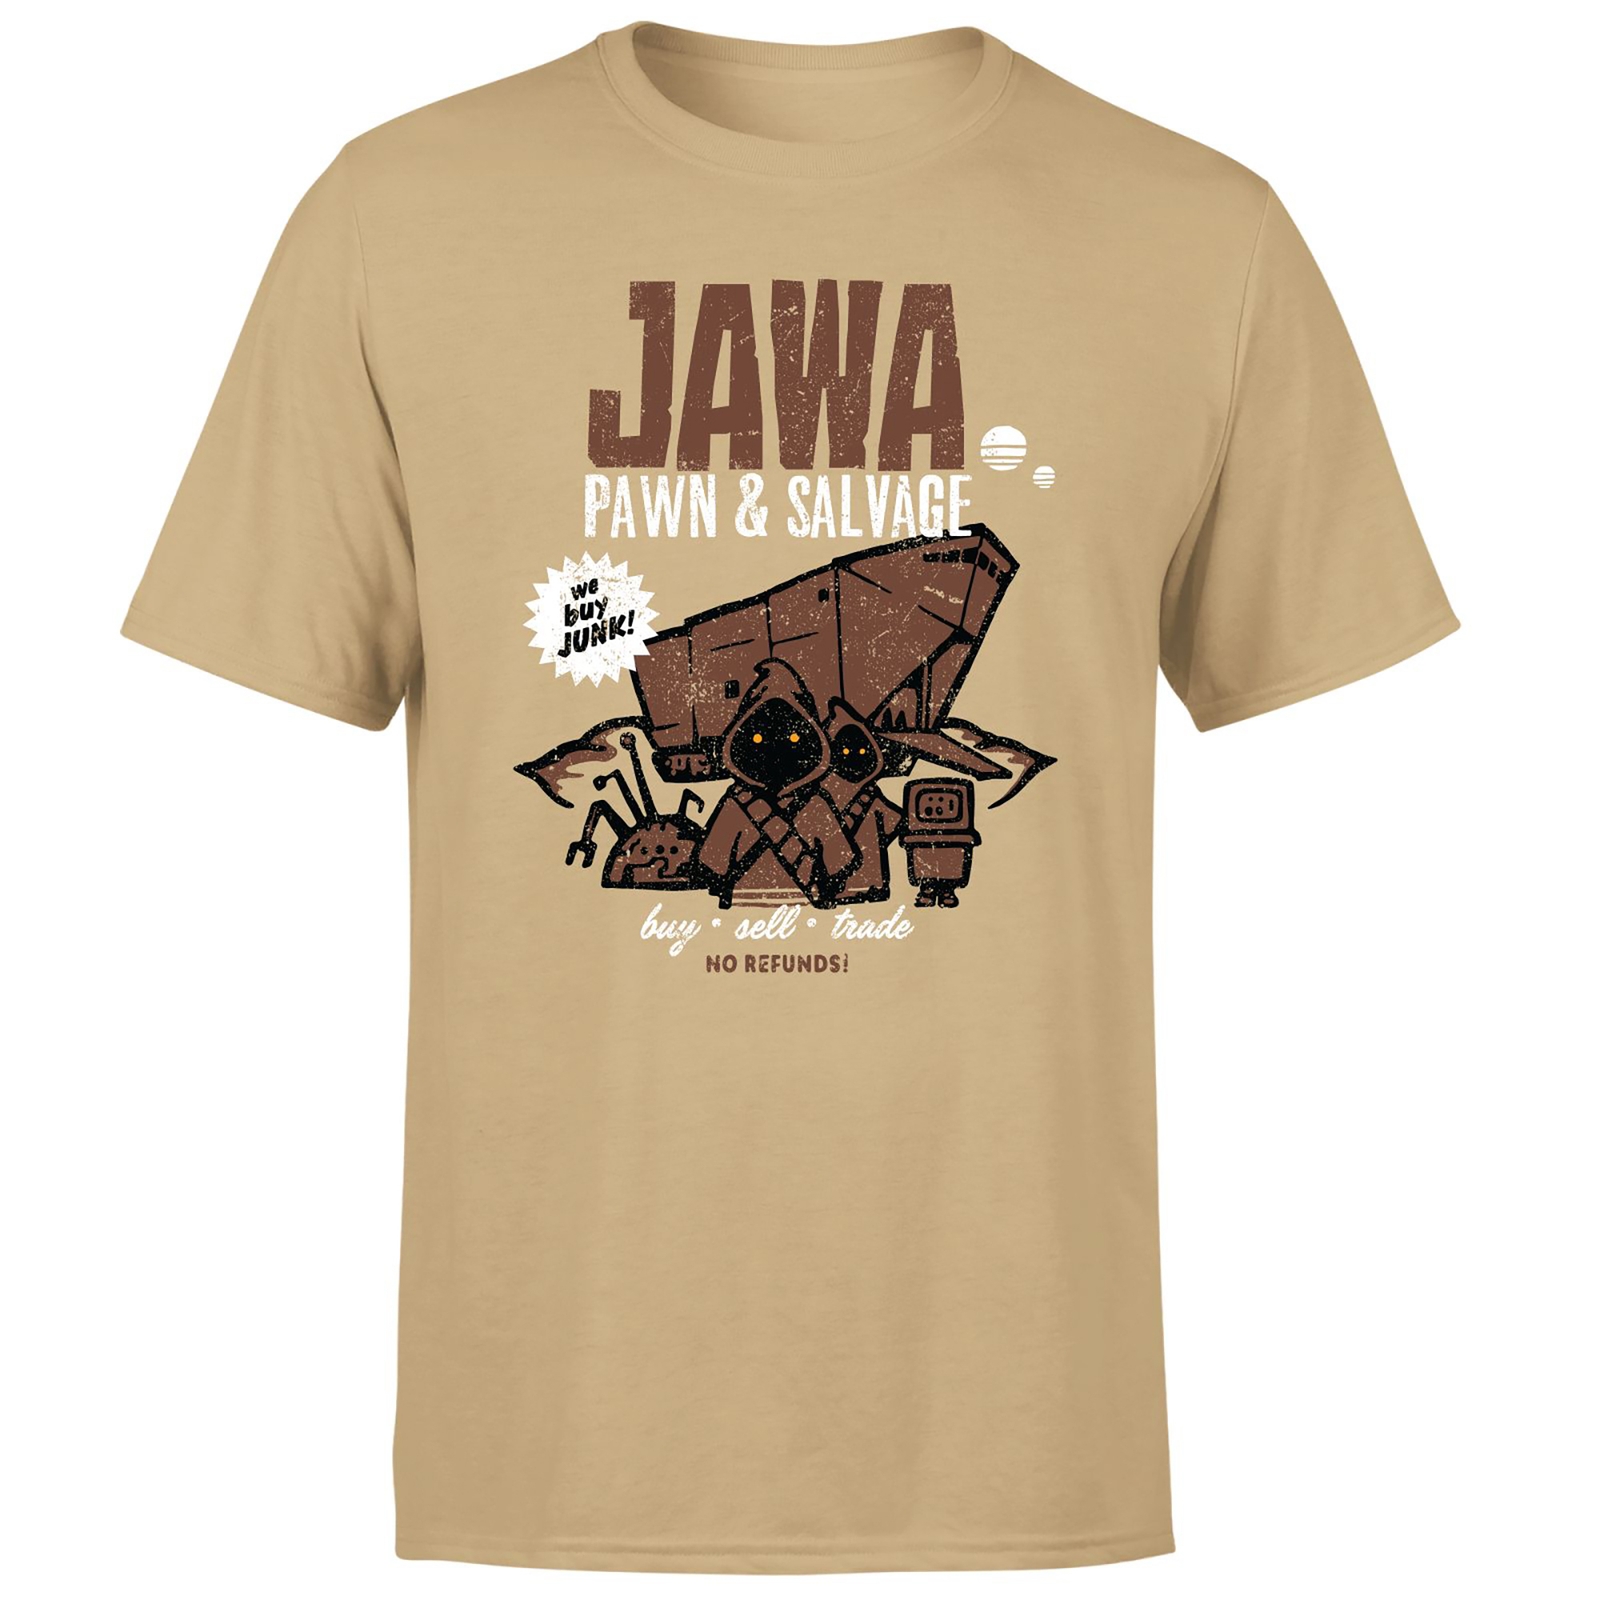 Star Wars Jawa Pawn And Salvage Unisex T-Shirt - Tan - L